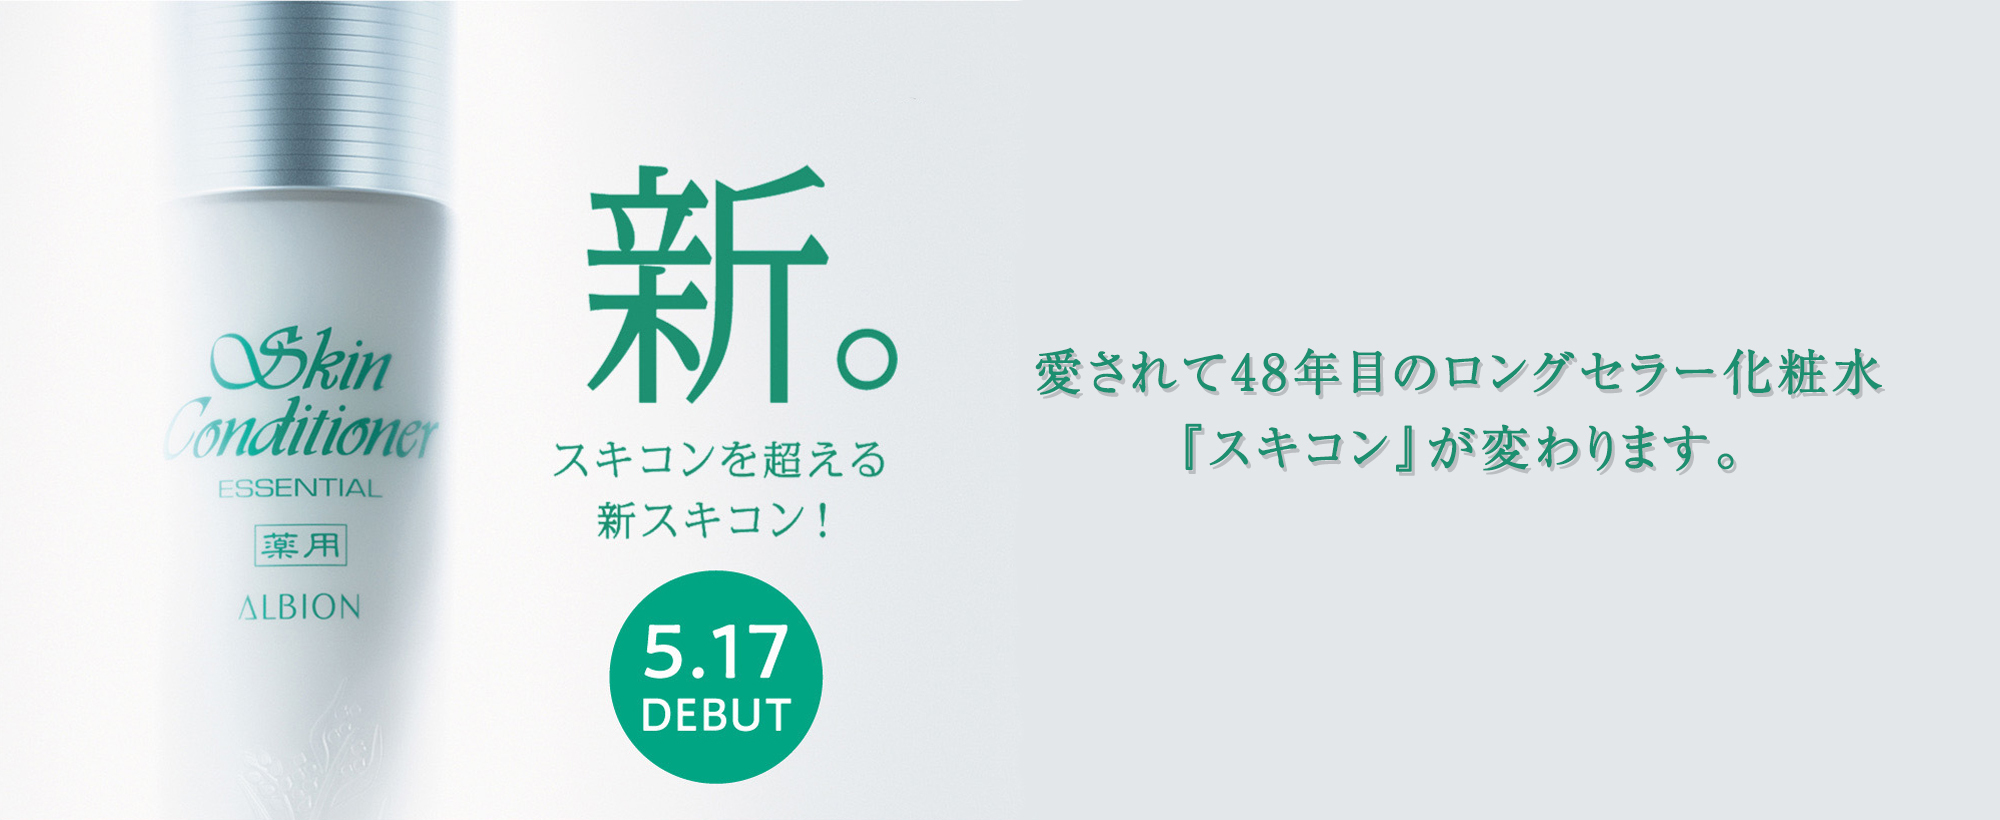 ALBION 新スキンコンディショナー 2022.05.17 DEBUT! | Perfumerie ...